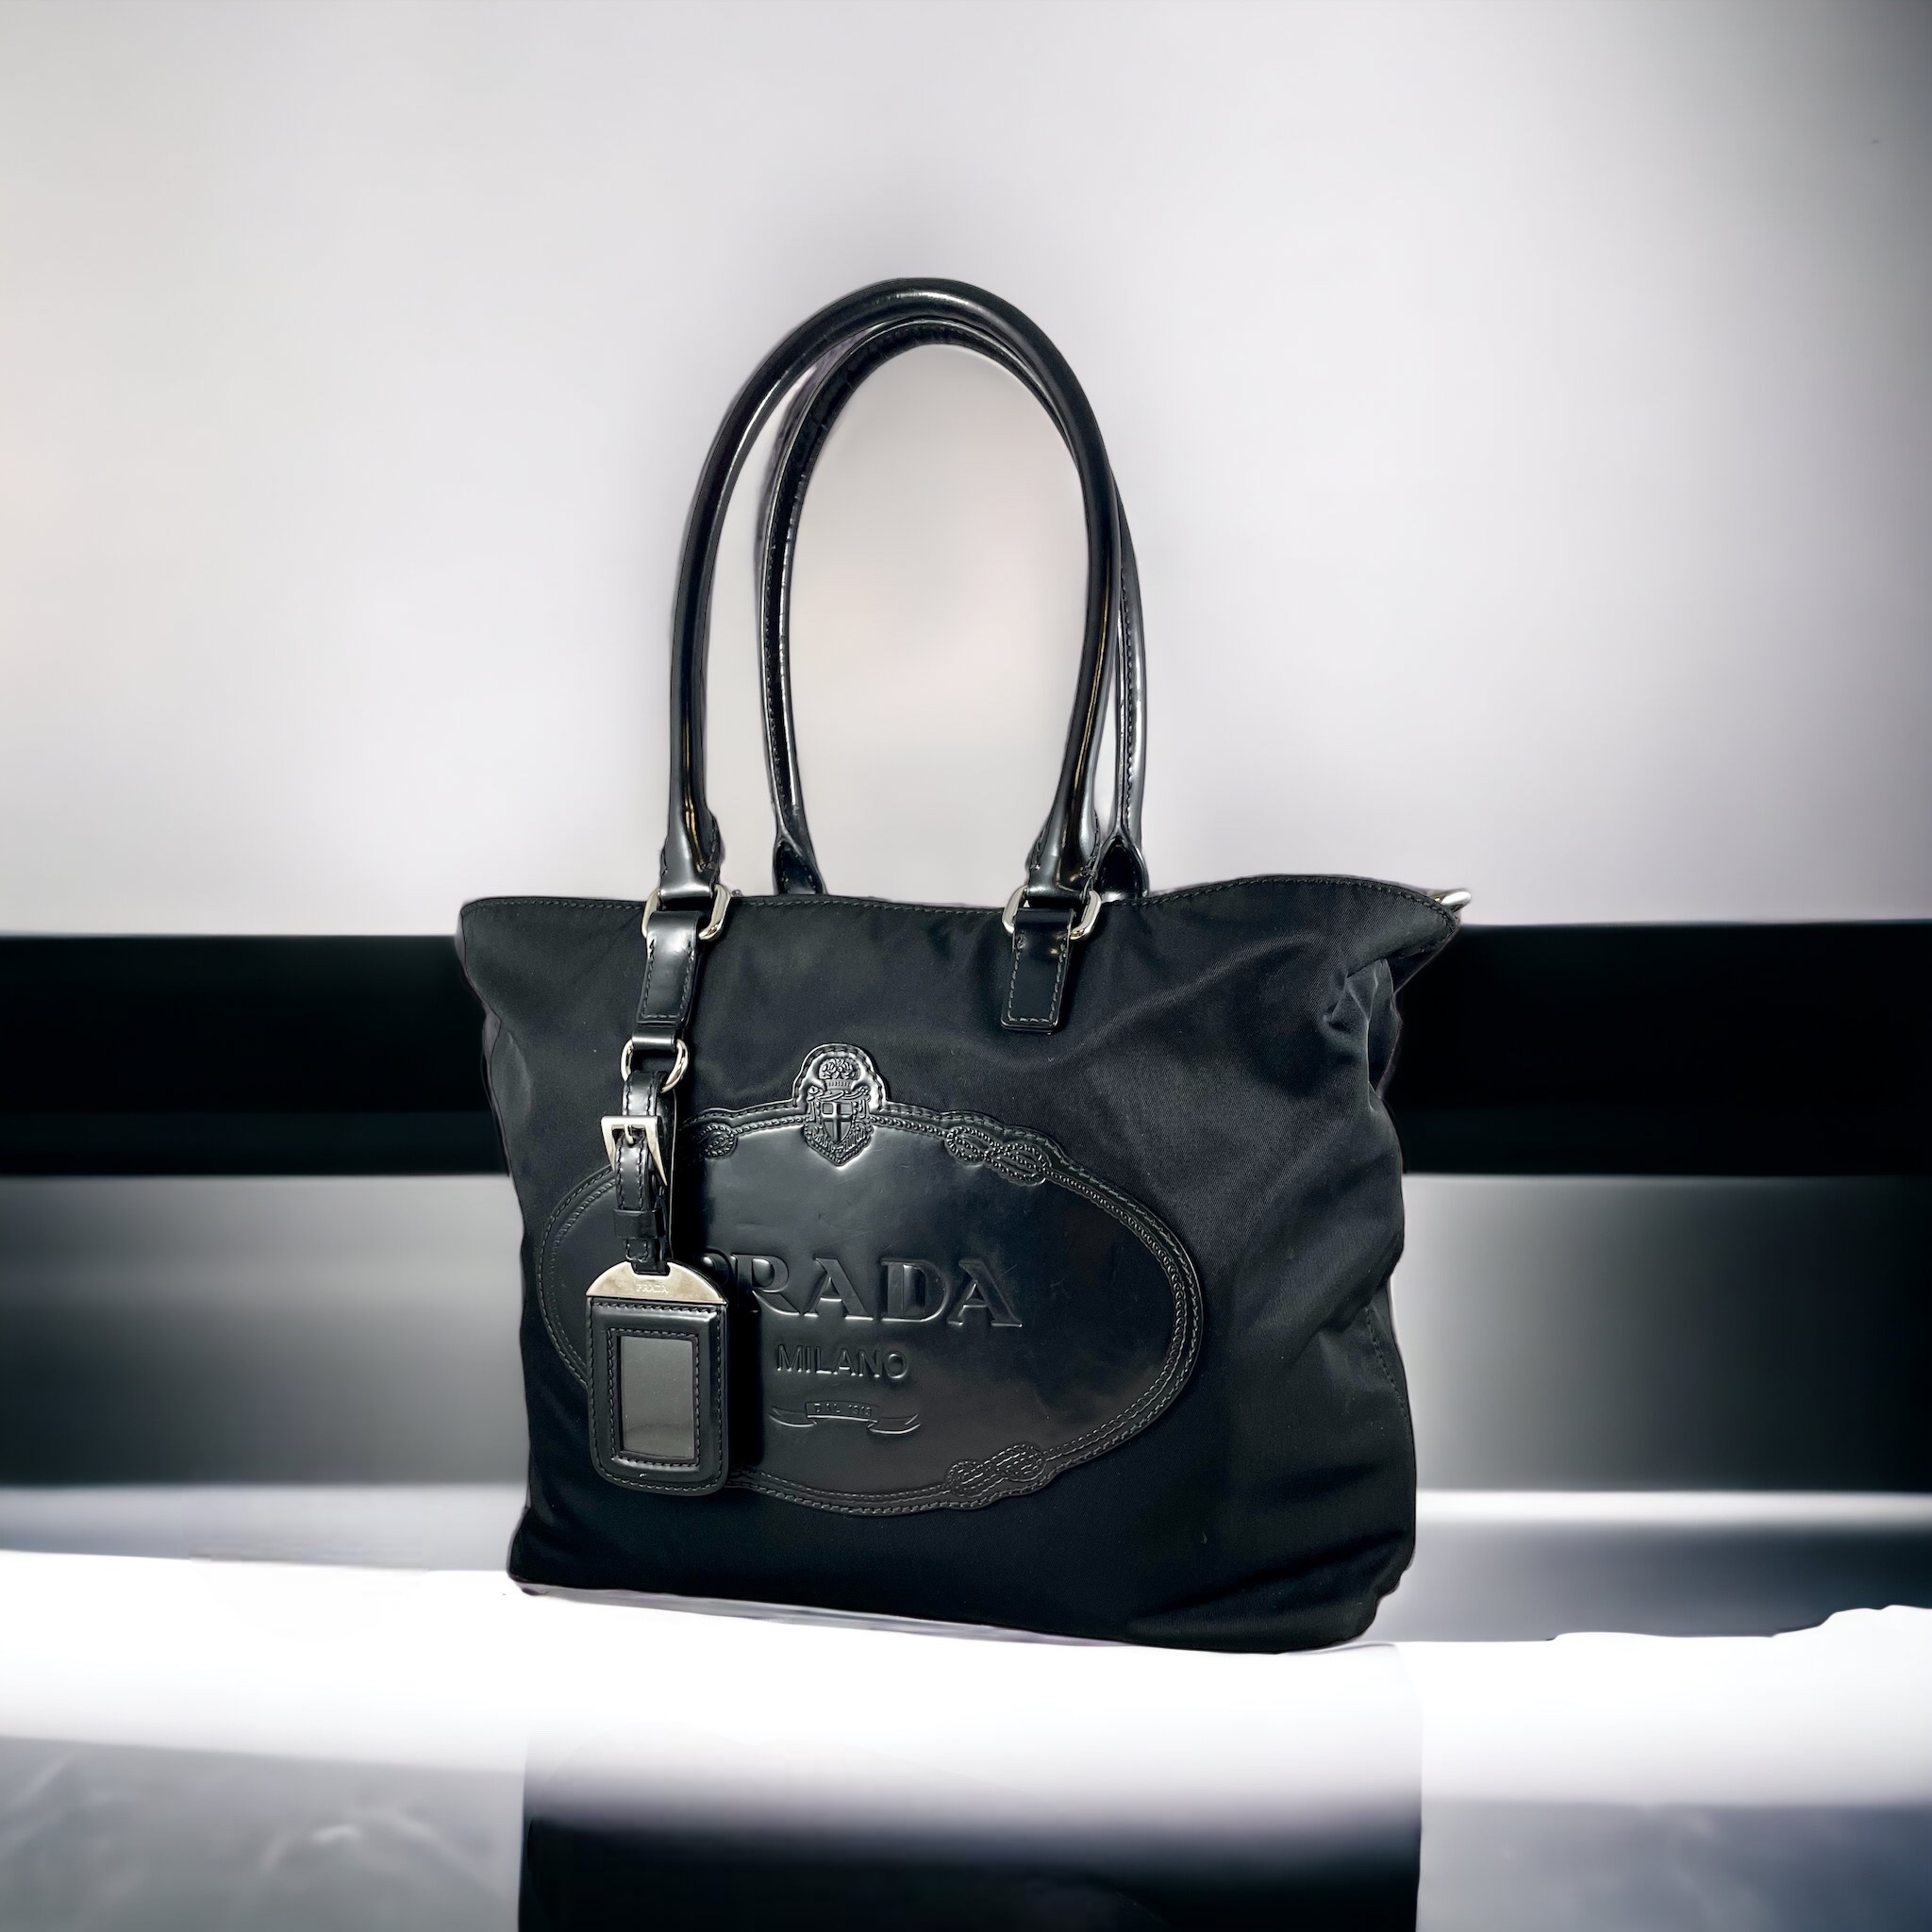 Prada Grey/Black Nylon Crossbody Bag